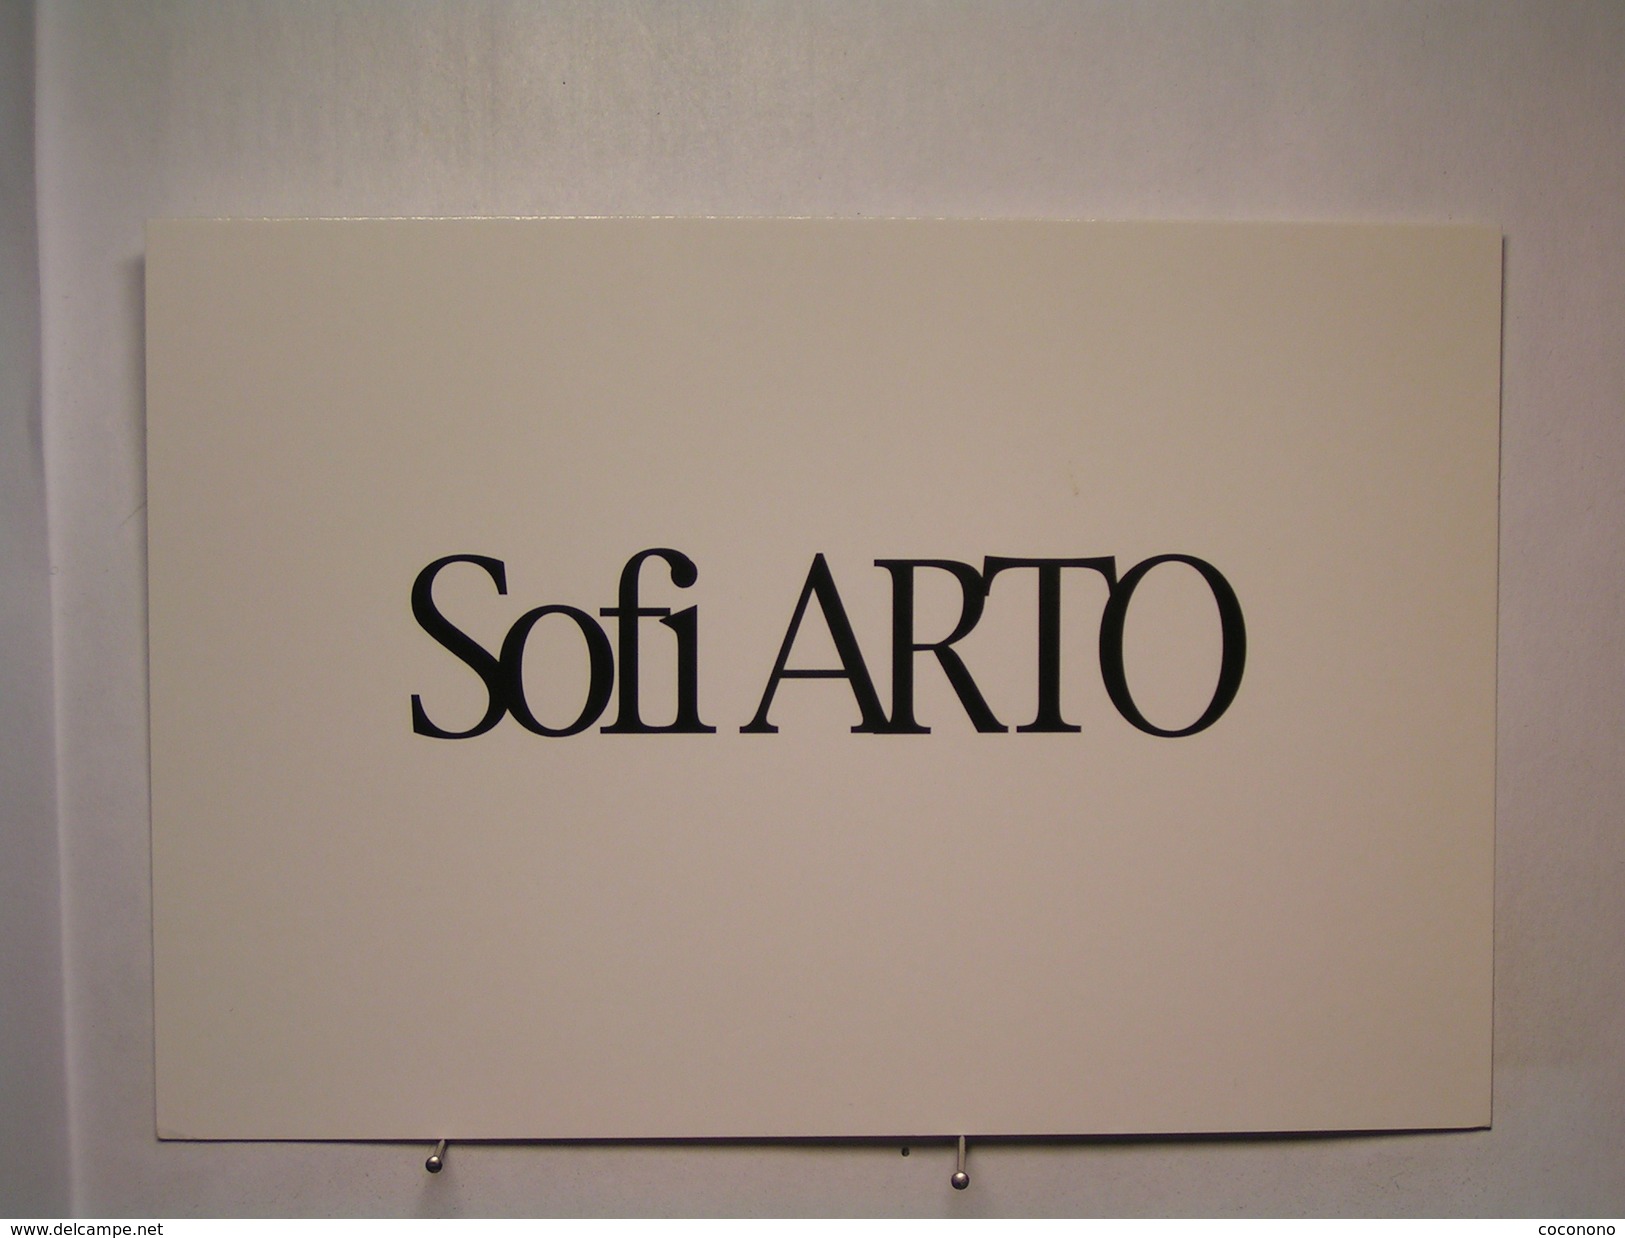 Octeville - Galerie De La Butte - 1996 - Sofi Arto - Installation - Octeville